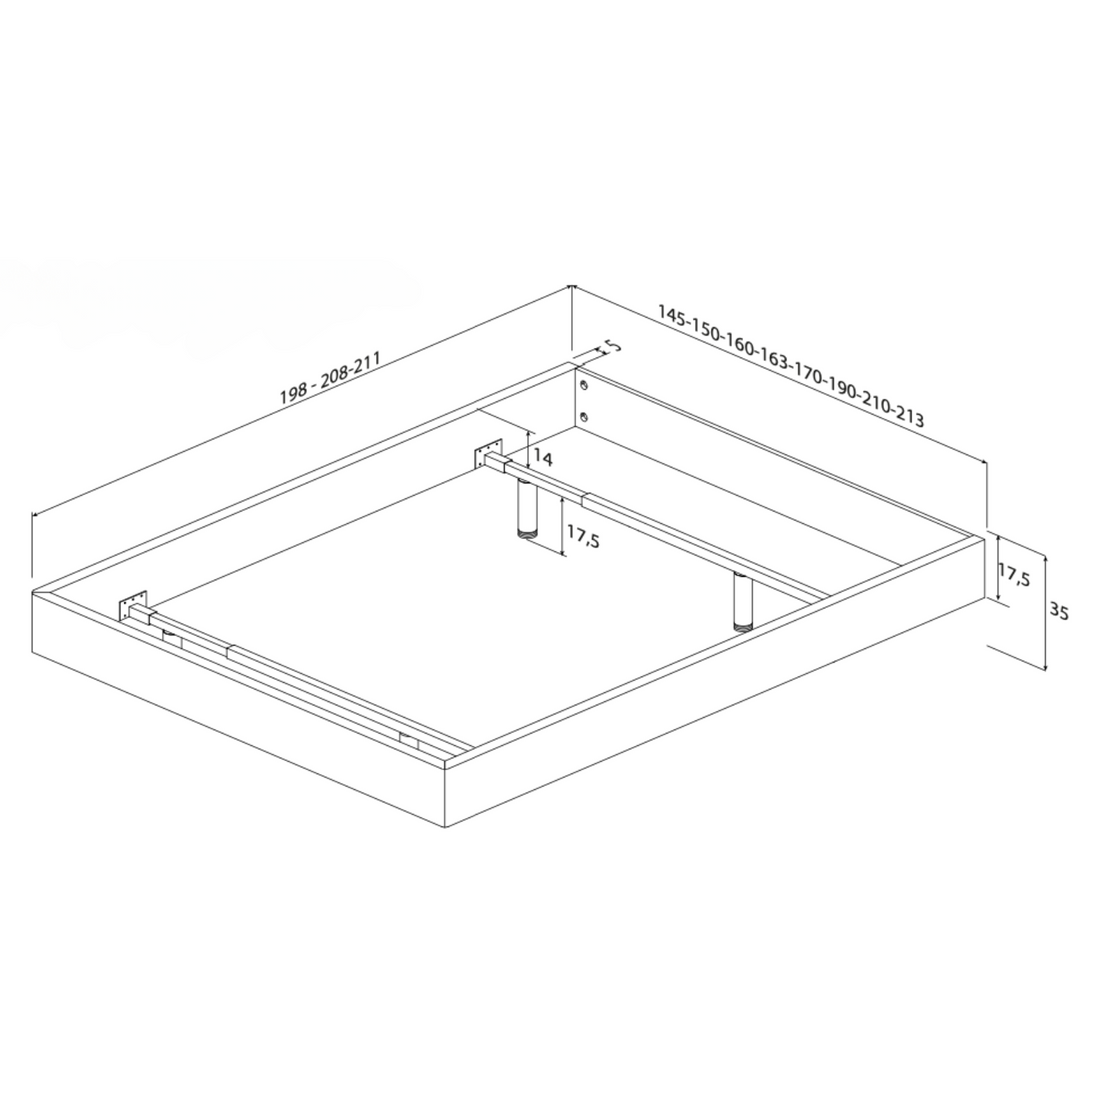 MOBENIA Trapez Bed BEdframe dimensions